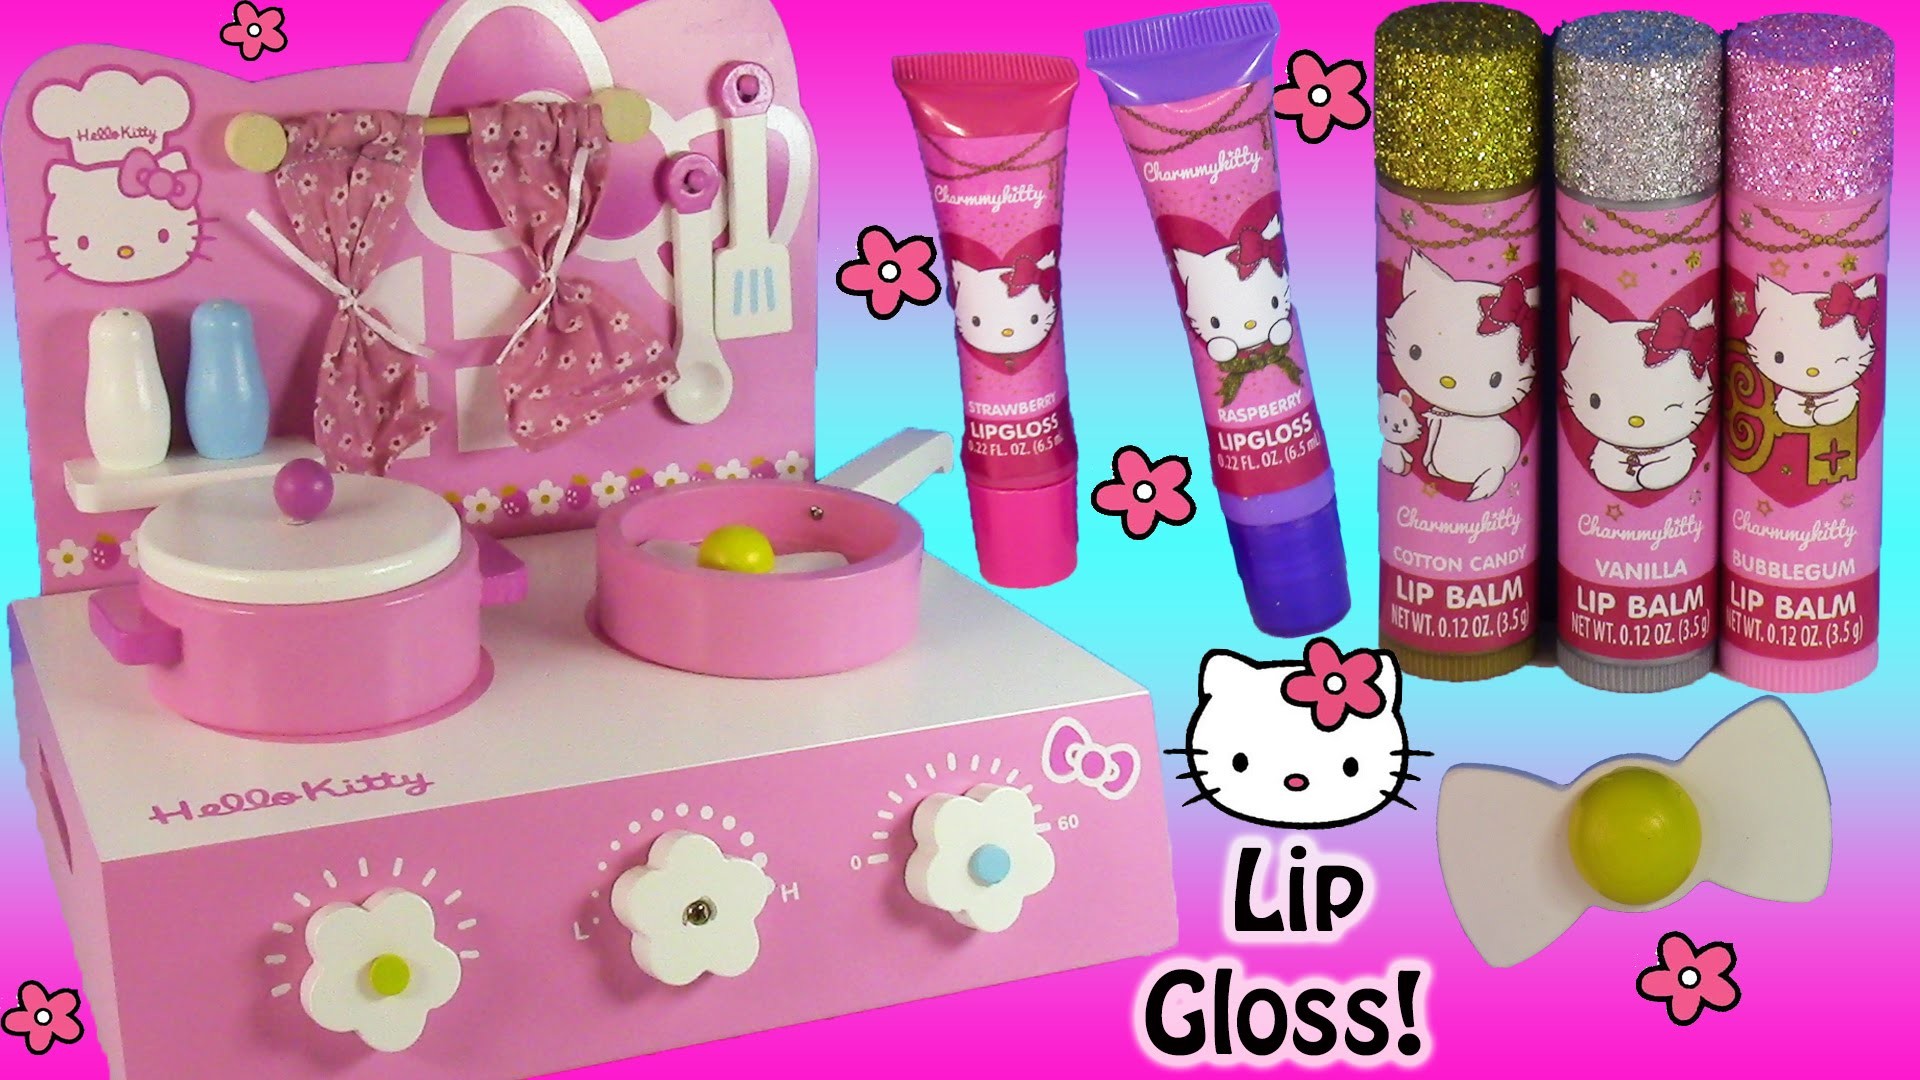 1920x1080 Hello Kitty Tabletop Kitchen & Charm Kitty HK 7 piece Sparkle Lip gloss  Set! Unboxing FUN - YouTube